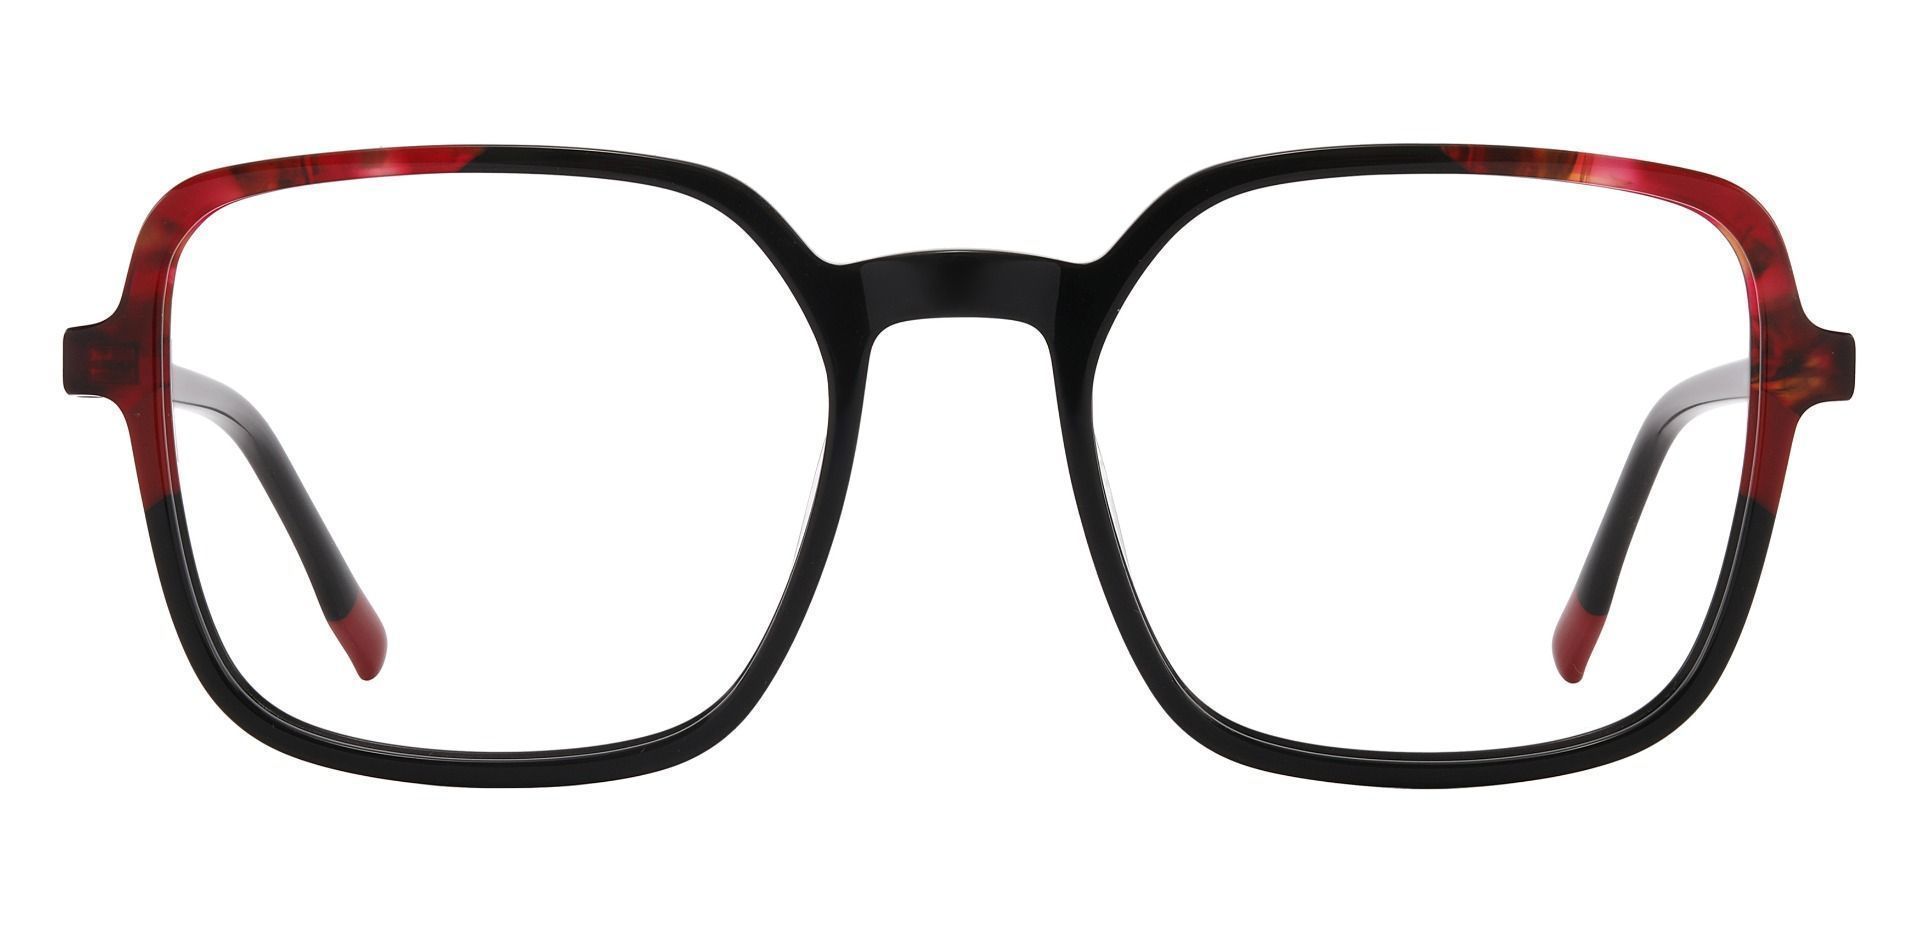 Medford Square Reading Glasses - Black